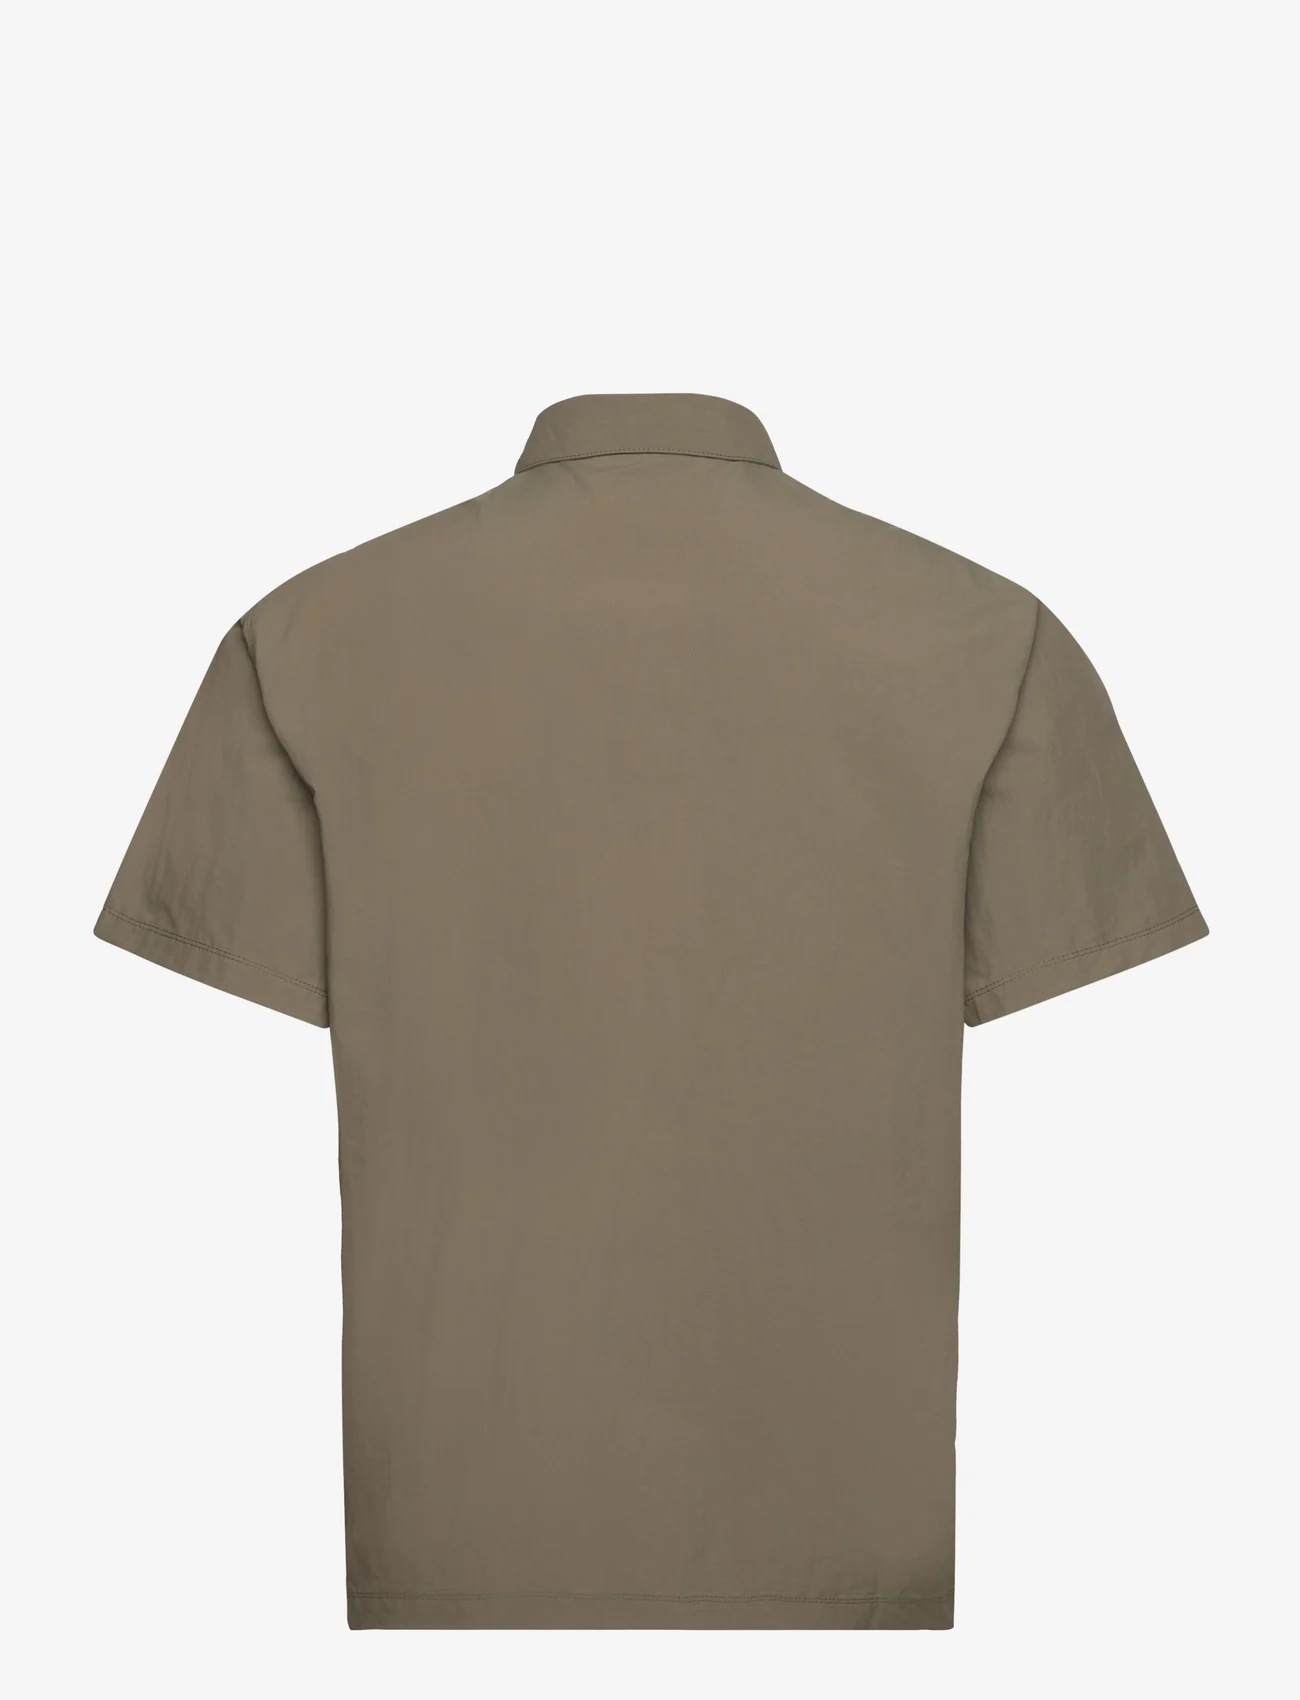 Columbia Sportswear - Mountaindale Outdoor SS Shirt - basic shirts - stone green - 1